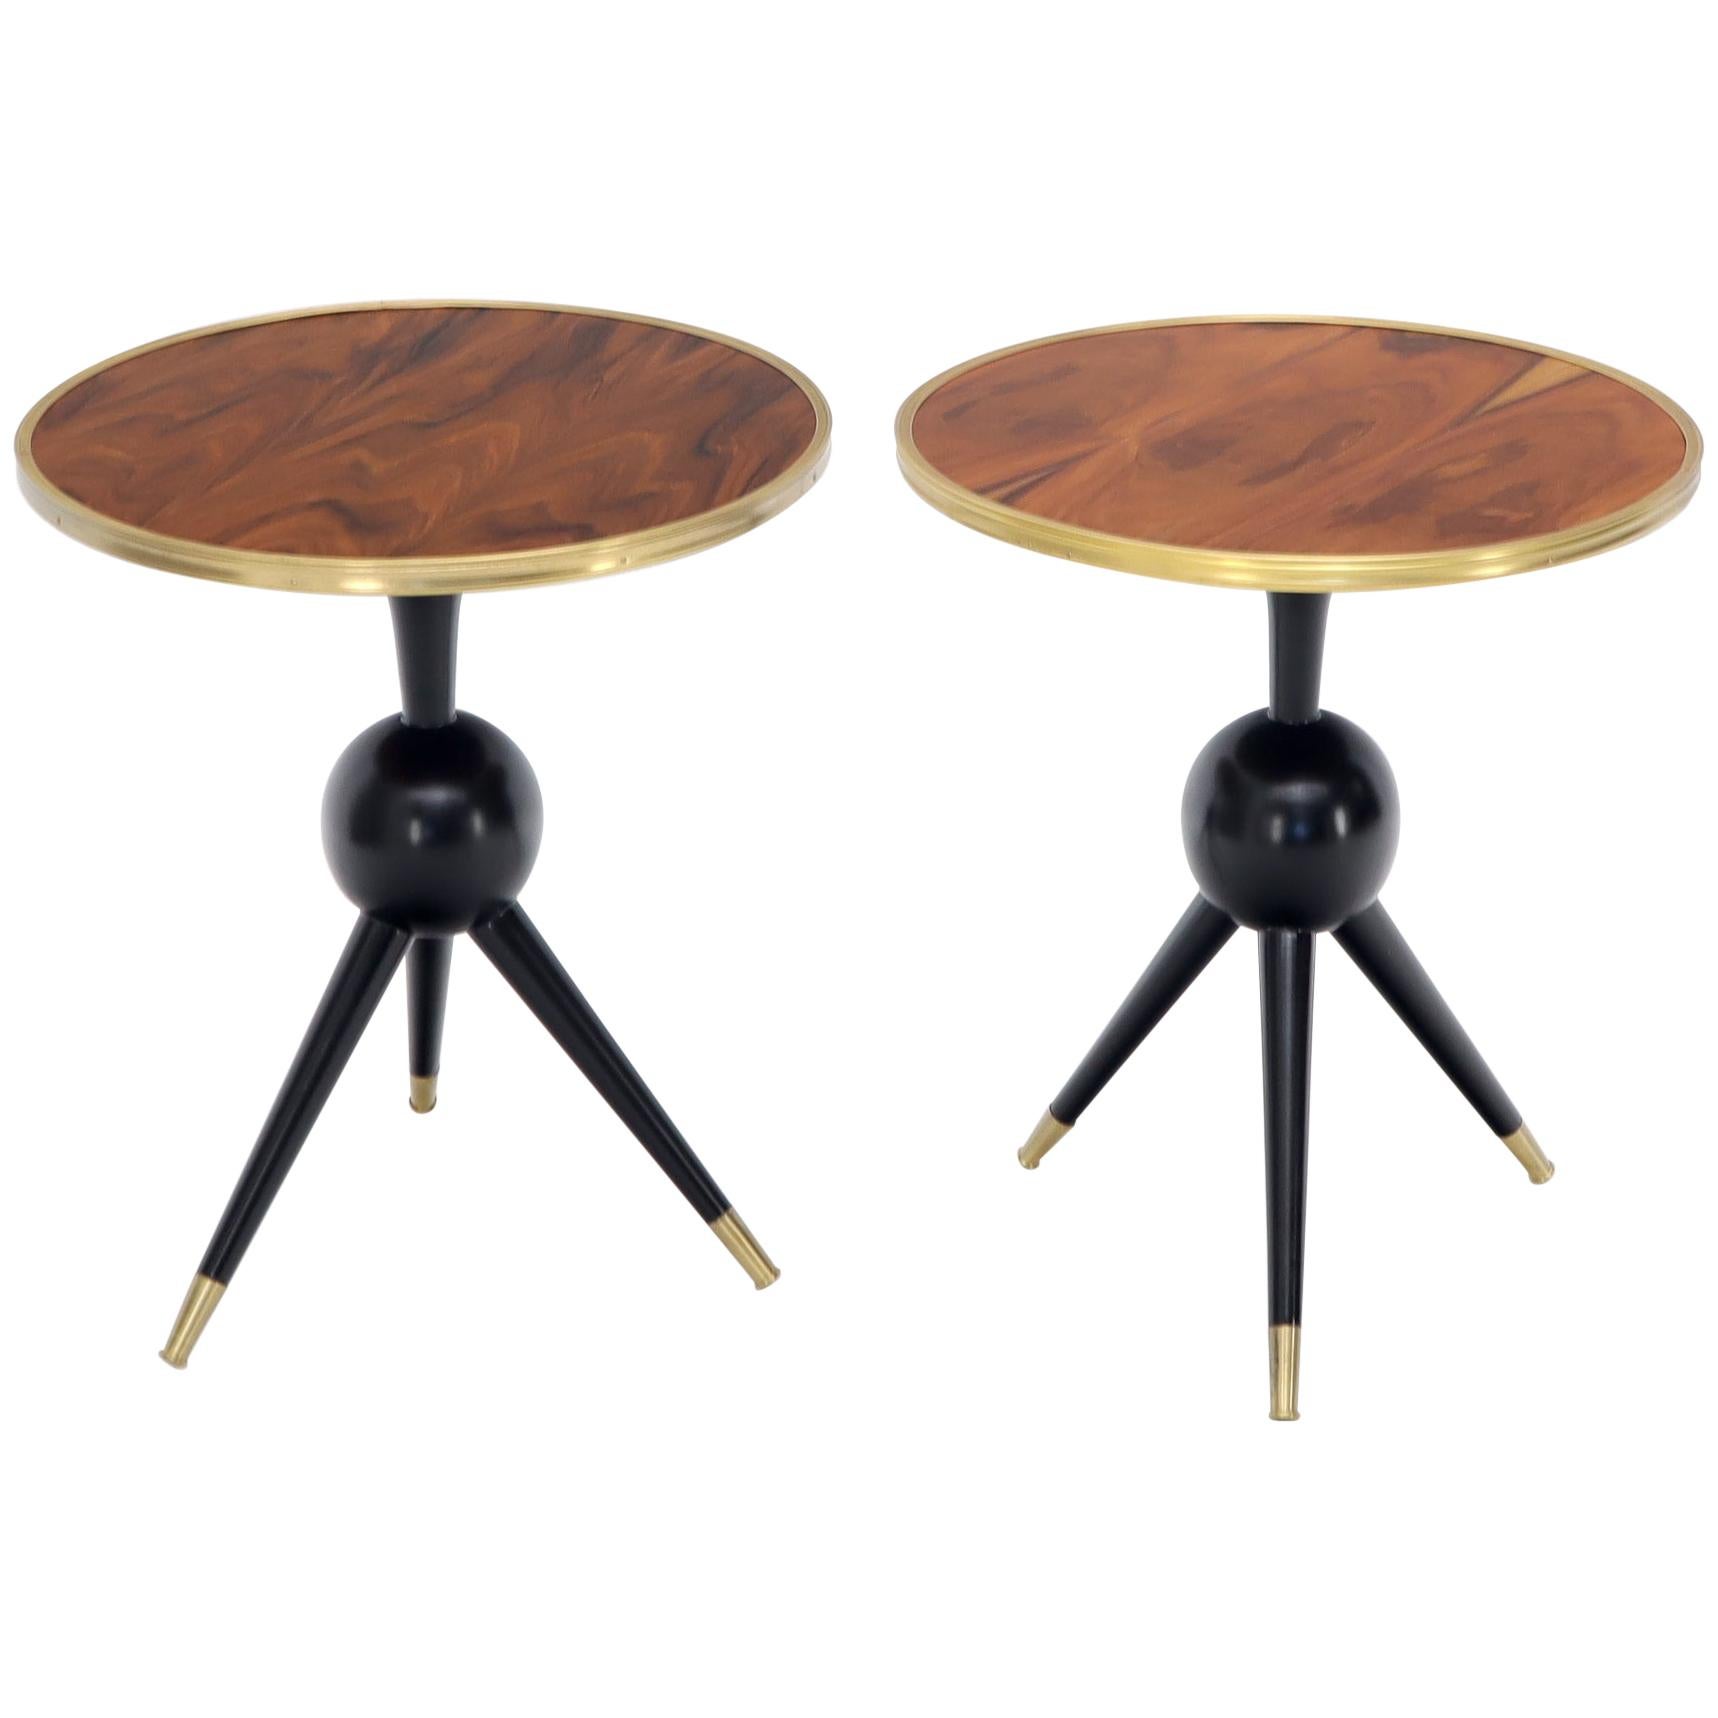 Pair of Midcentury Italian Modern Rosewood Tops Brass Edge Ebonized Base Tables